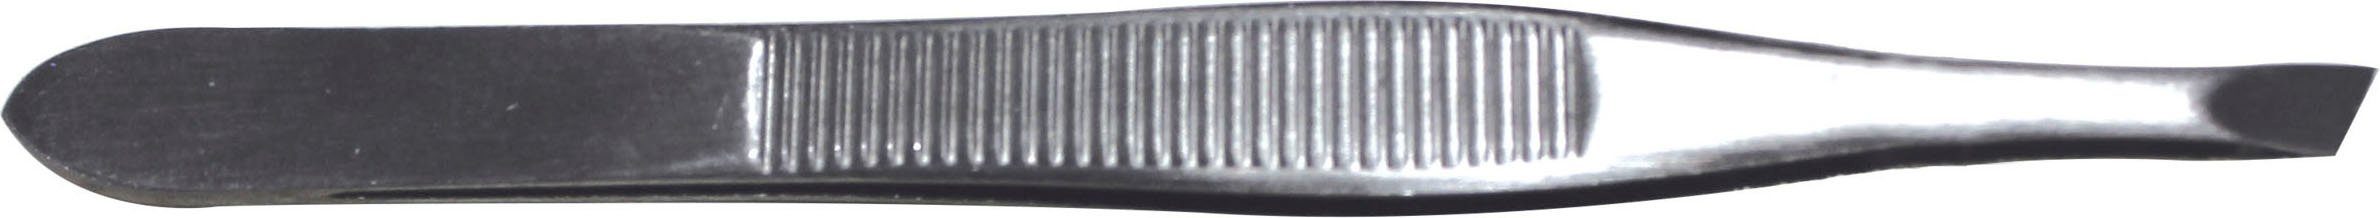 Remington Beauty-Trimmer antimikrobielles NE3455, Nano-Silber Gehäuse